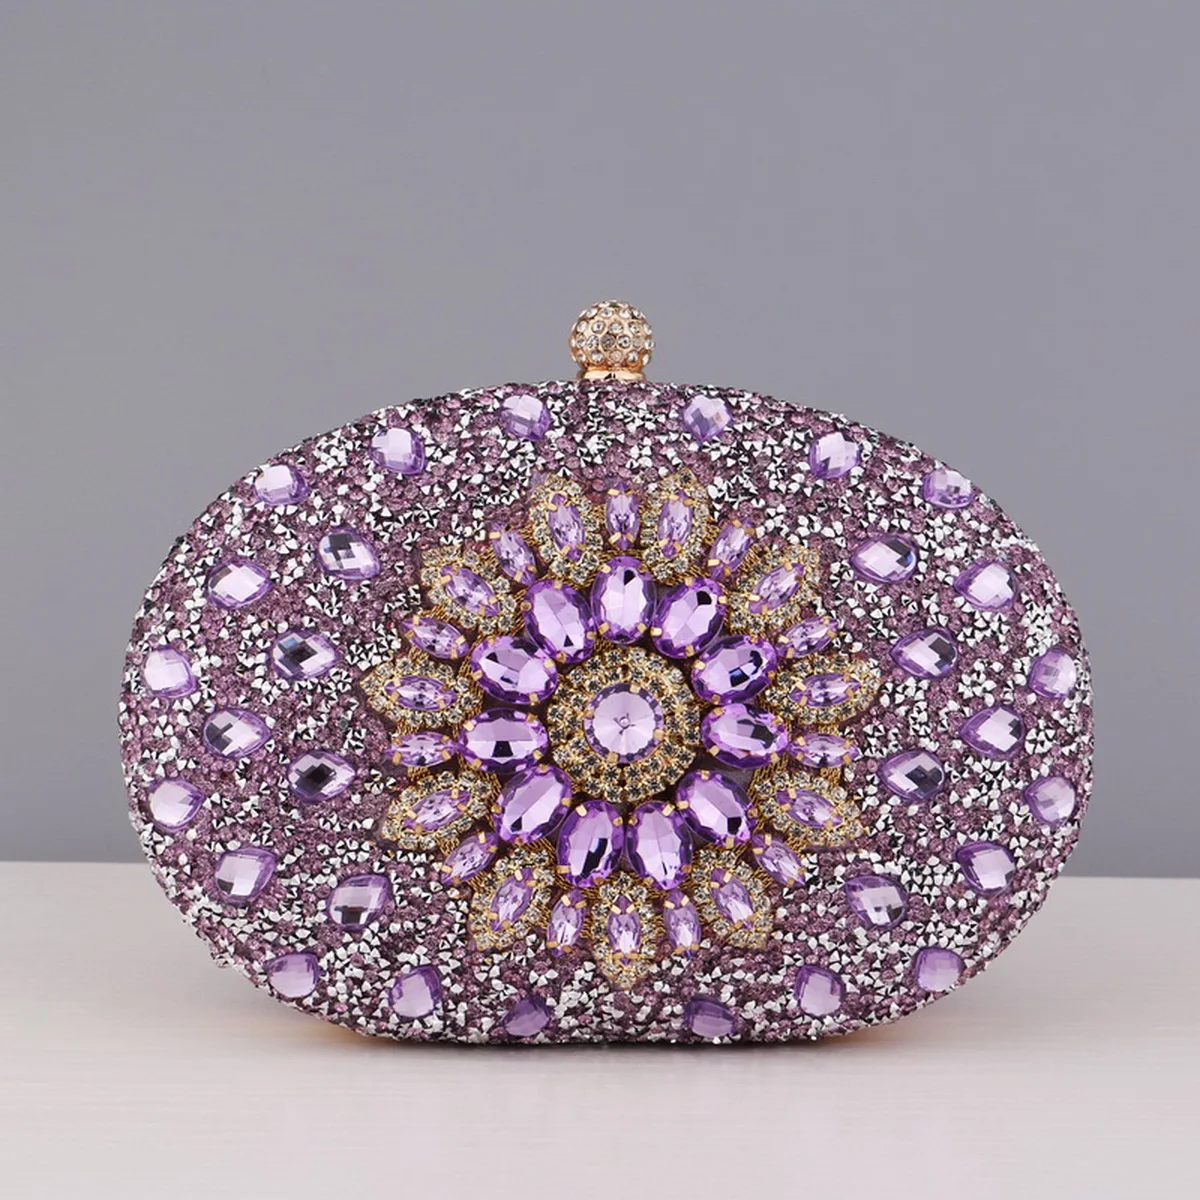 Flower Rhinestones Evening Bags Metal Prom Clutch Diamonds Clutch With Chain Shoulder Handbags Wedding Female Purse